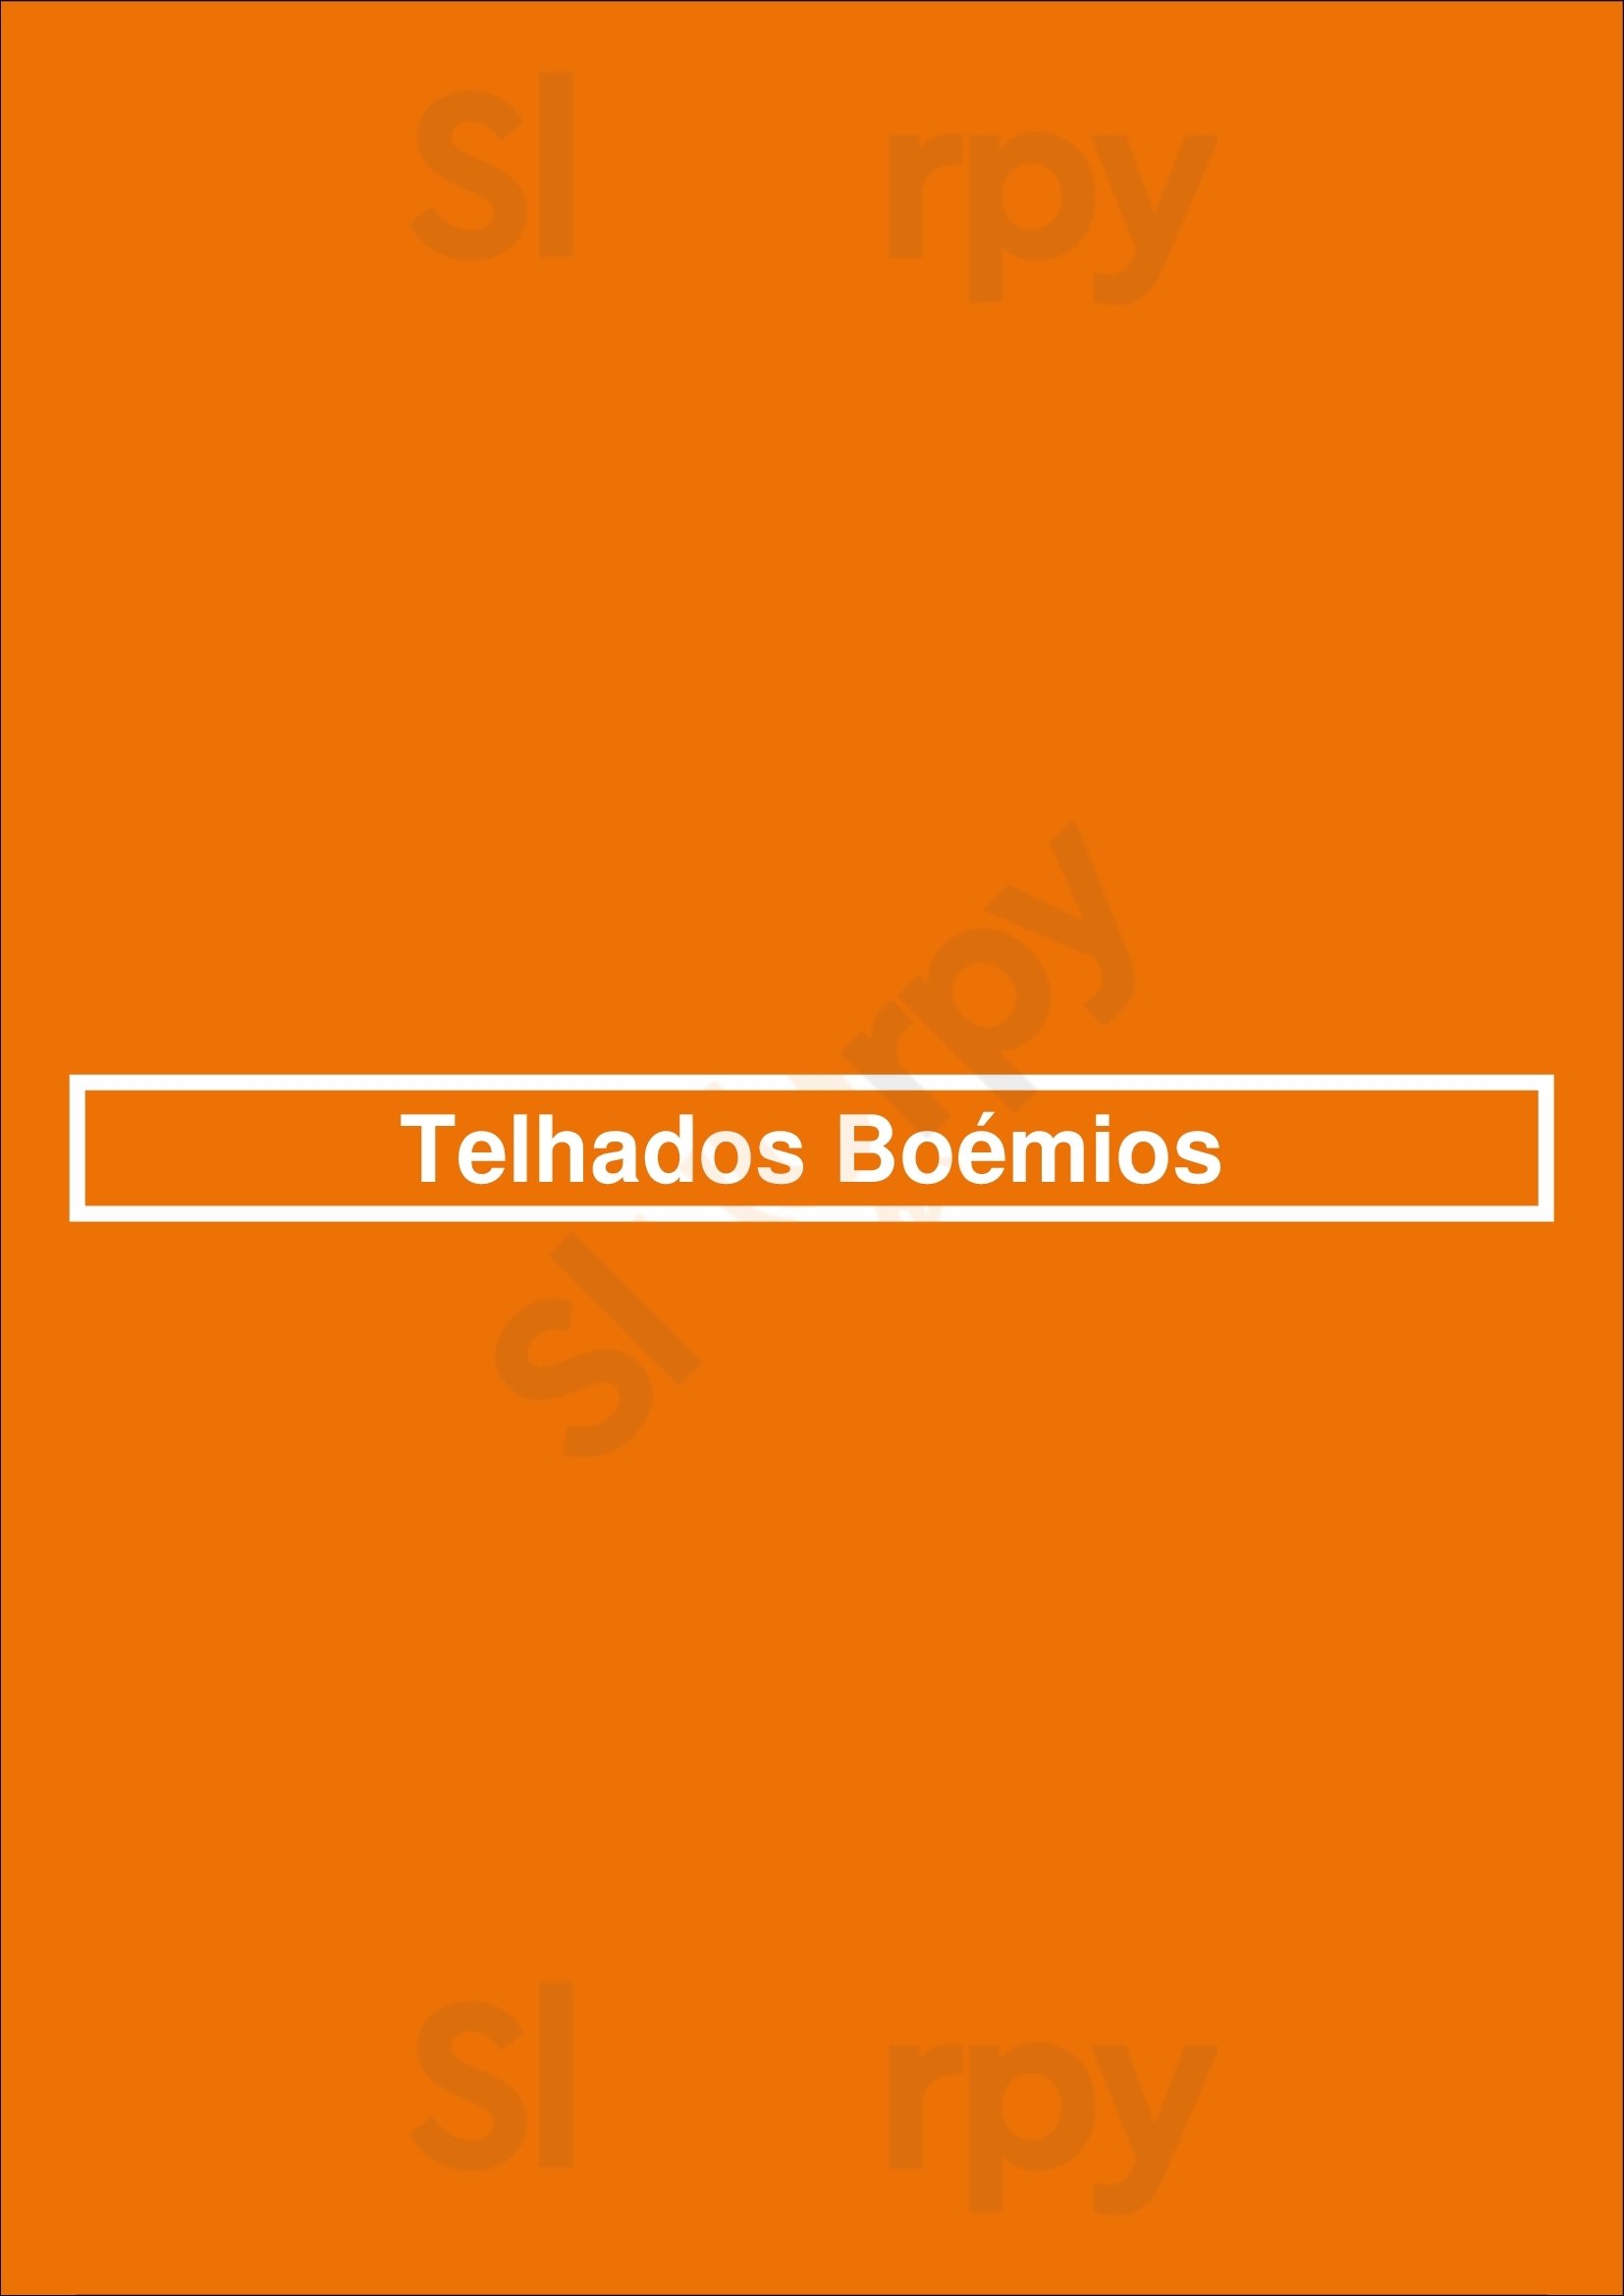 Telhados Boémios Porto Menu - 1